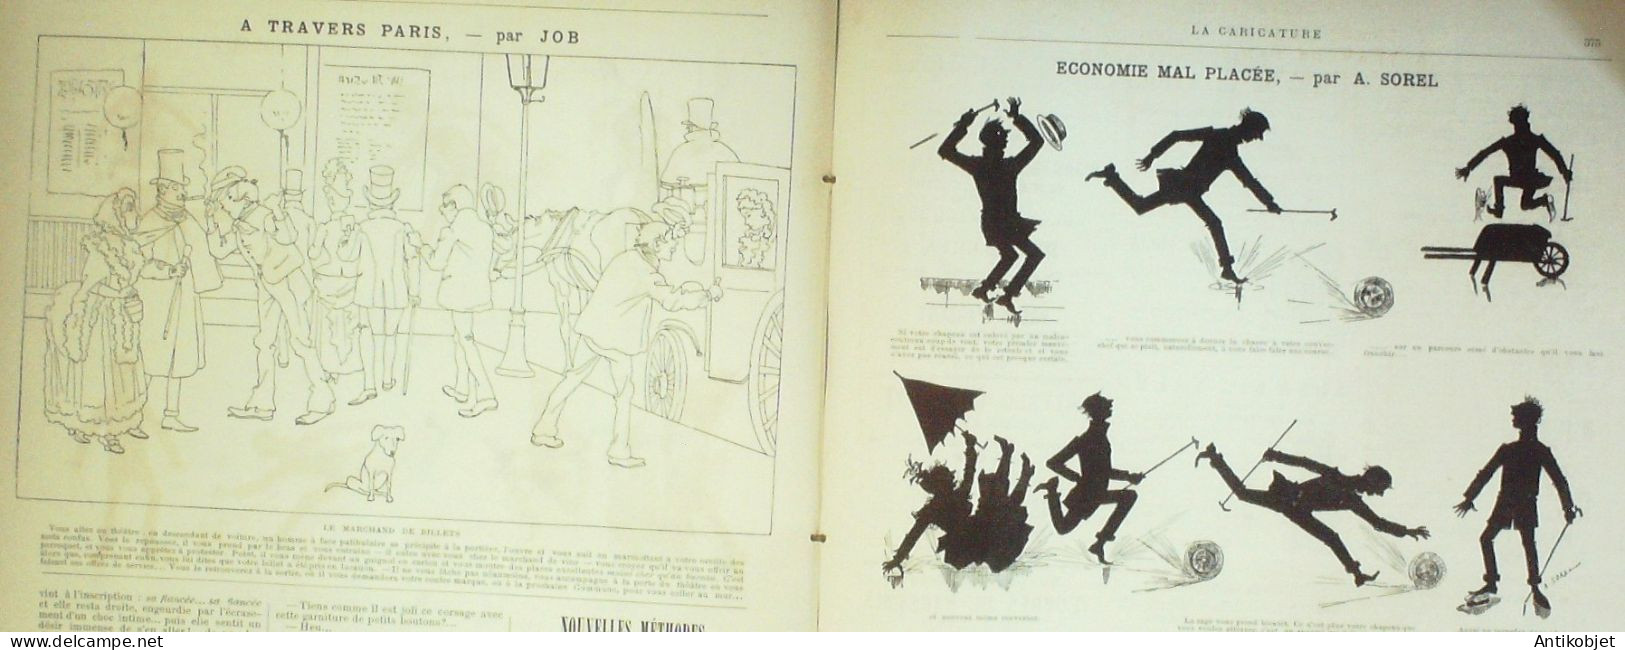 La Caricature 1886 N°359 Draner Richepin Par Luque Malabar Par TrockSorel - Magazines - Before 1900